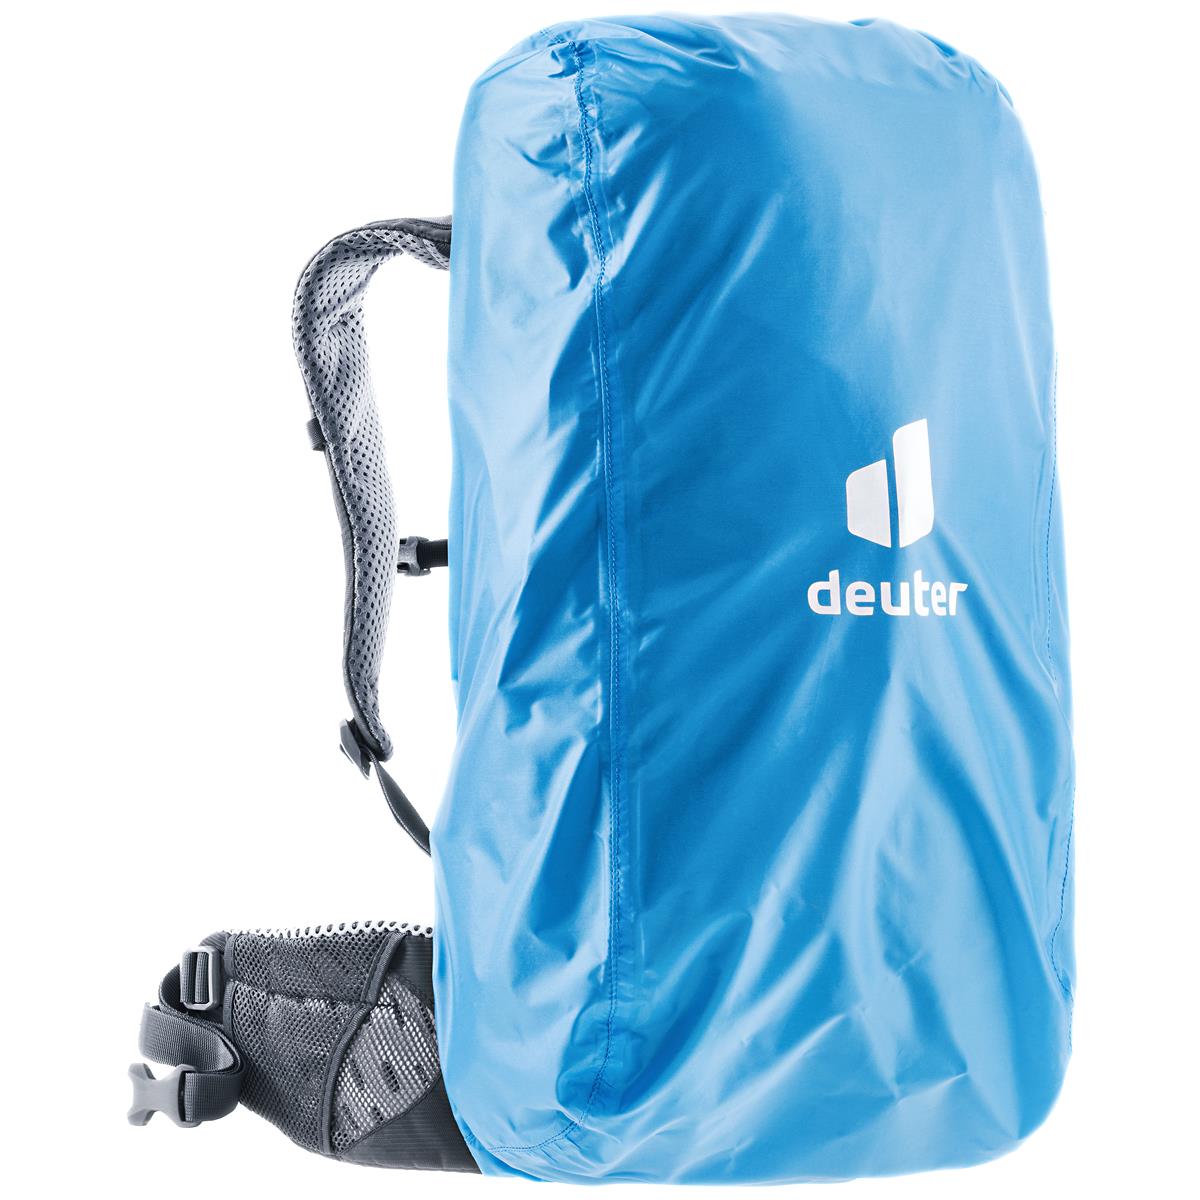 Deuter Backpack Raincover Raincover I Coolblue, 20L - 35L